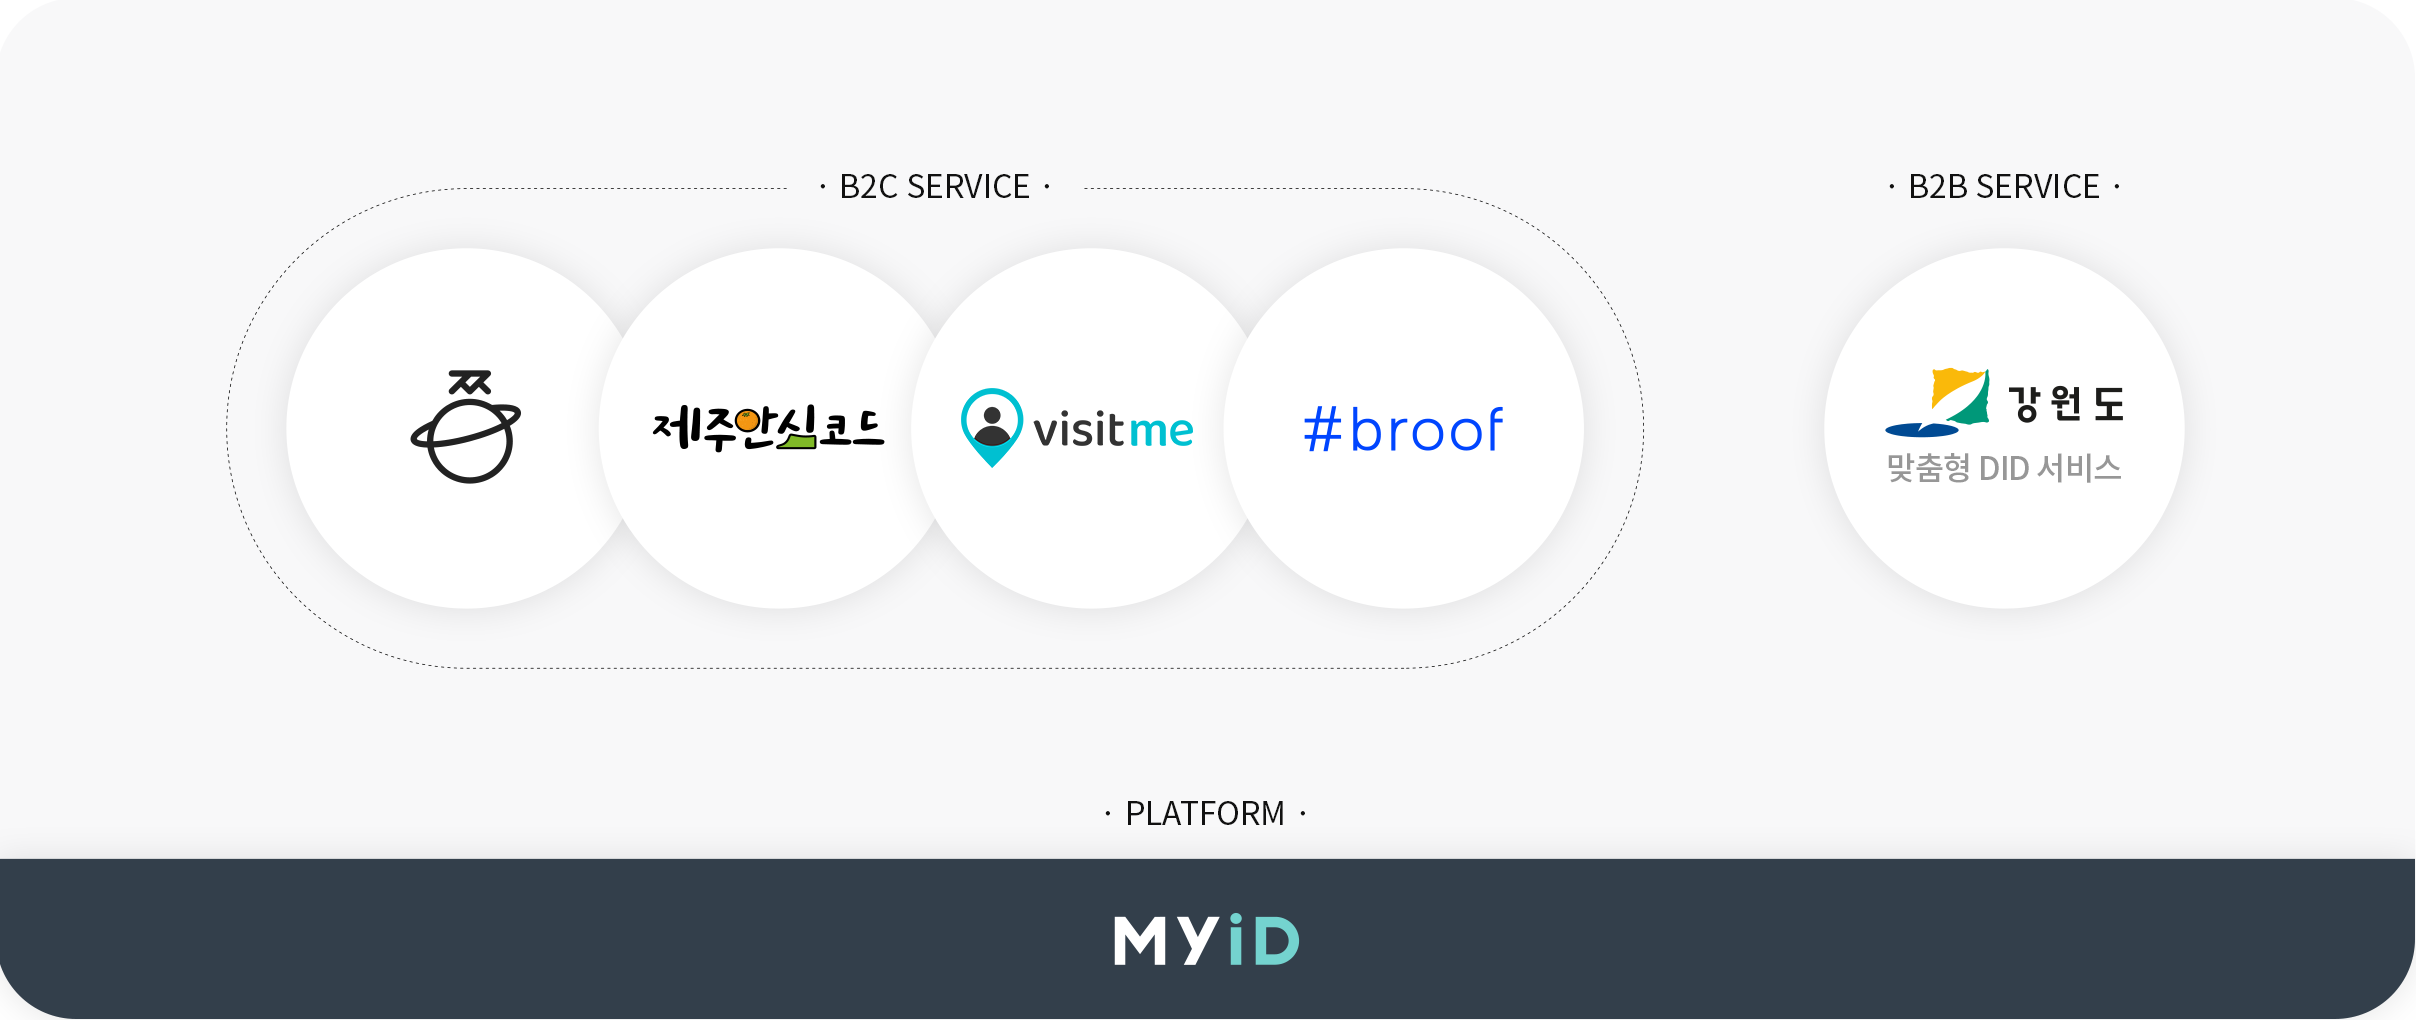 myid_platform-2x